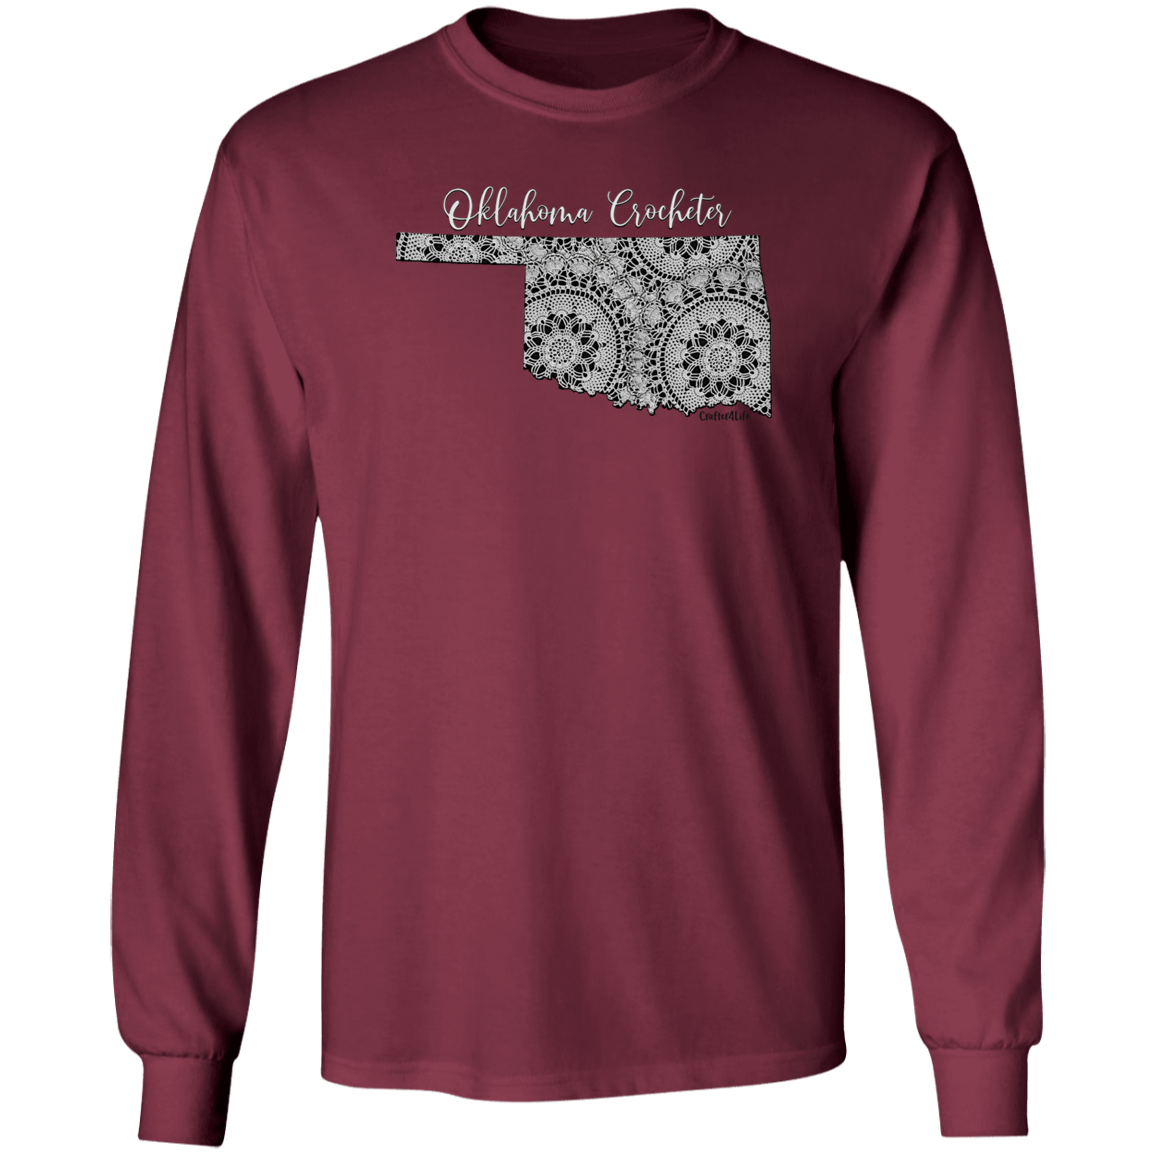 Oklahoma Crocheter LS Ultra Cotton T-Shirt